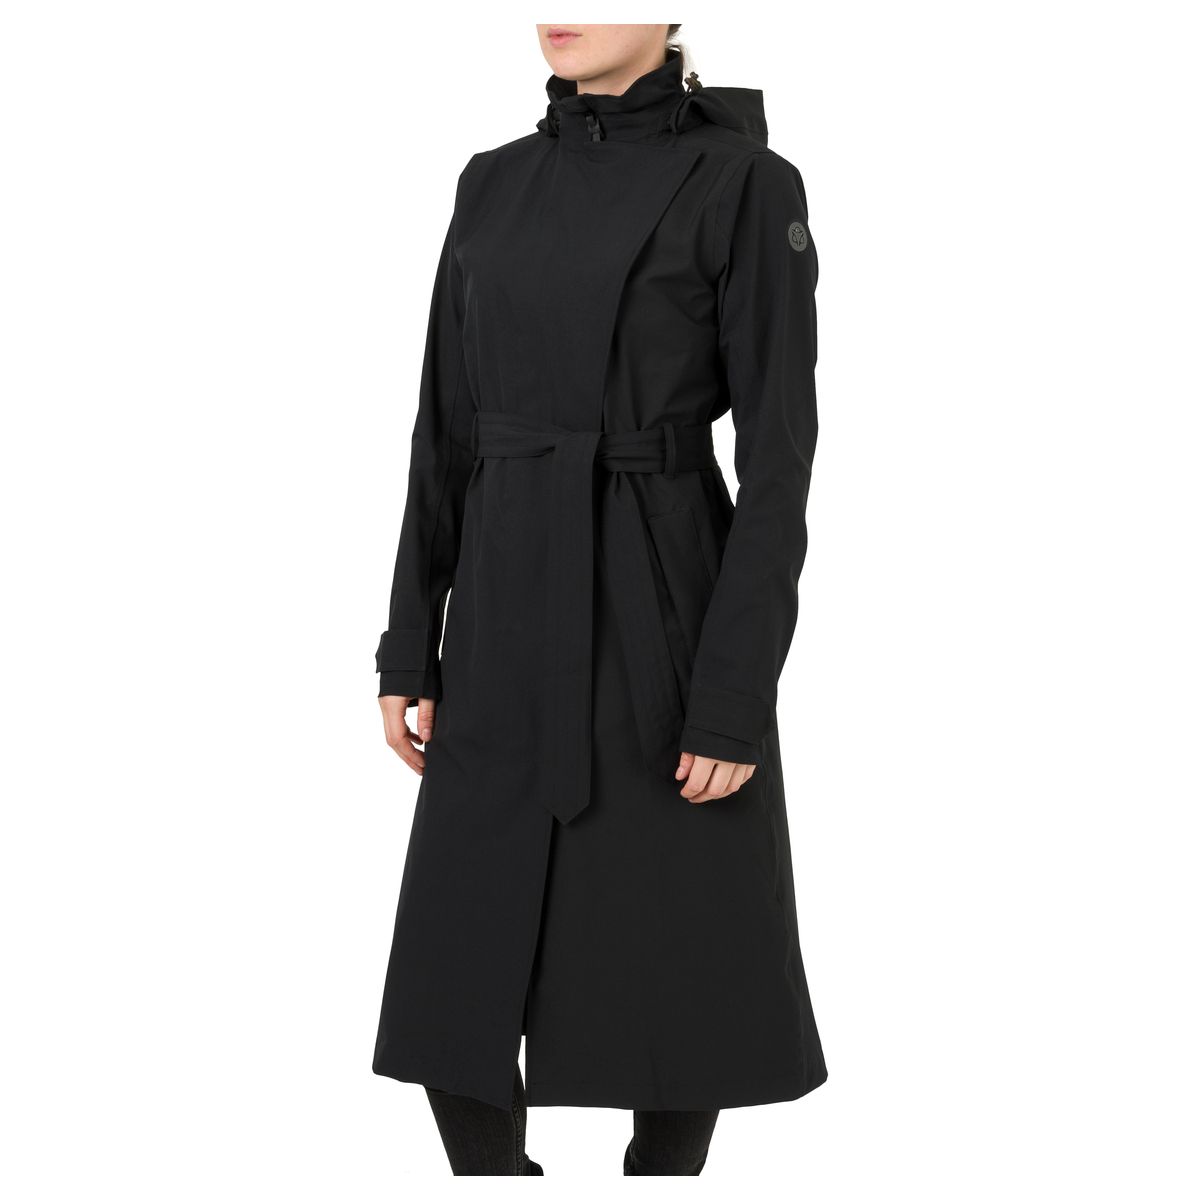 Trench Coat Long Rain Jacket Urban Outdoor Women fit example